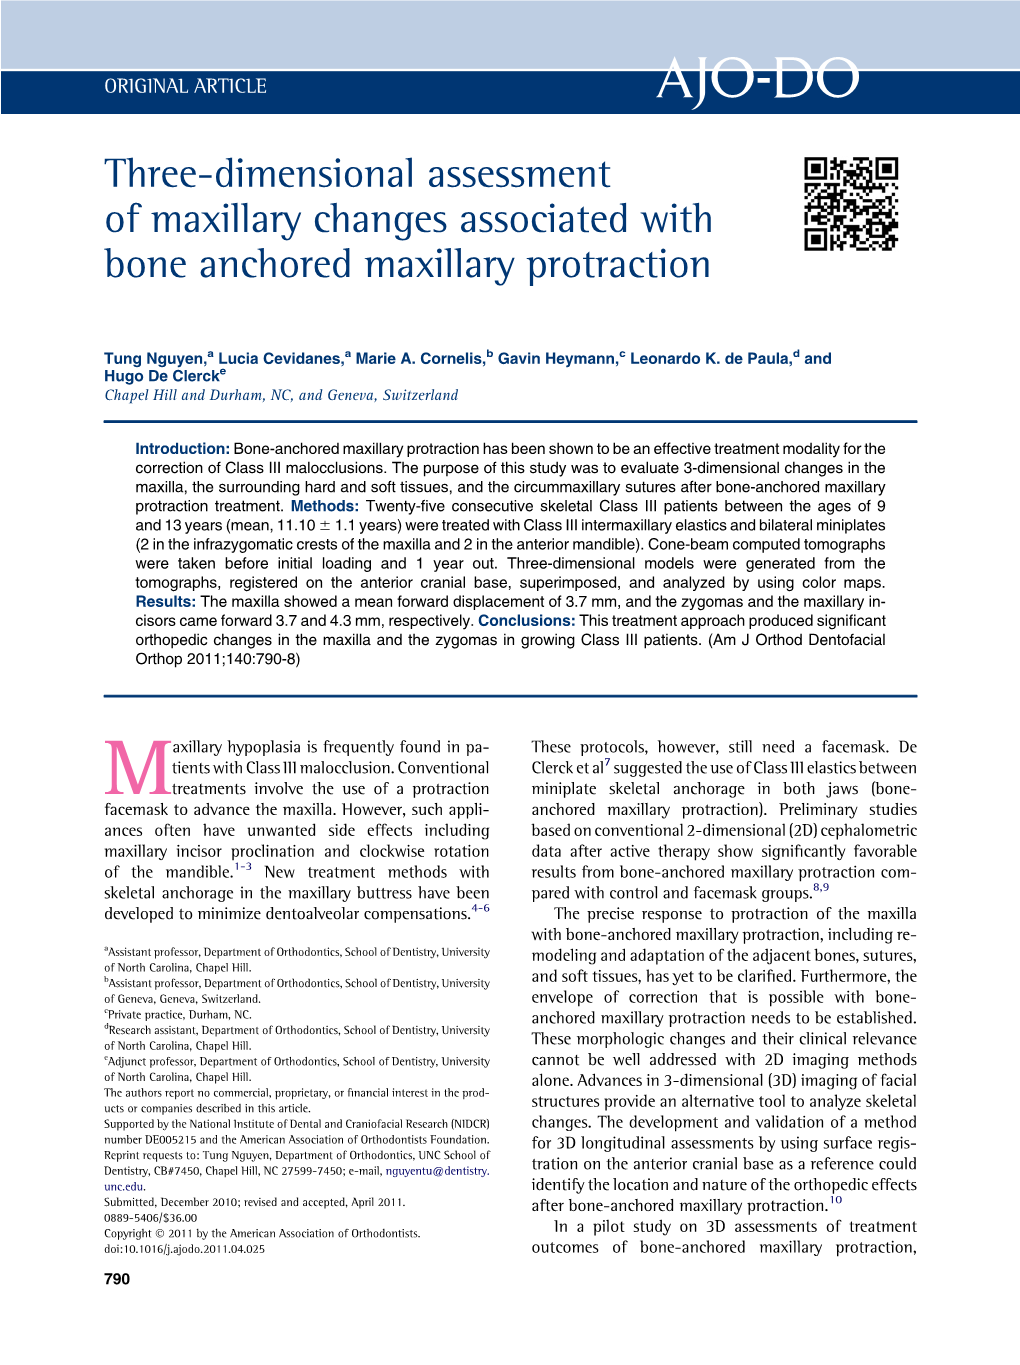 Maxillary Changes Associated with Bone Anchored Maxillary Protraction